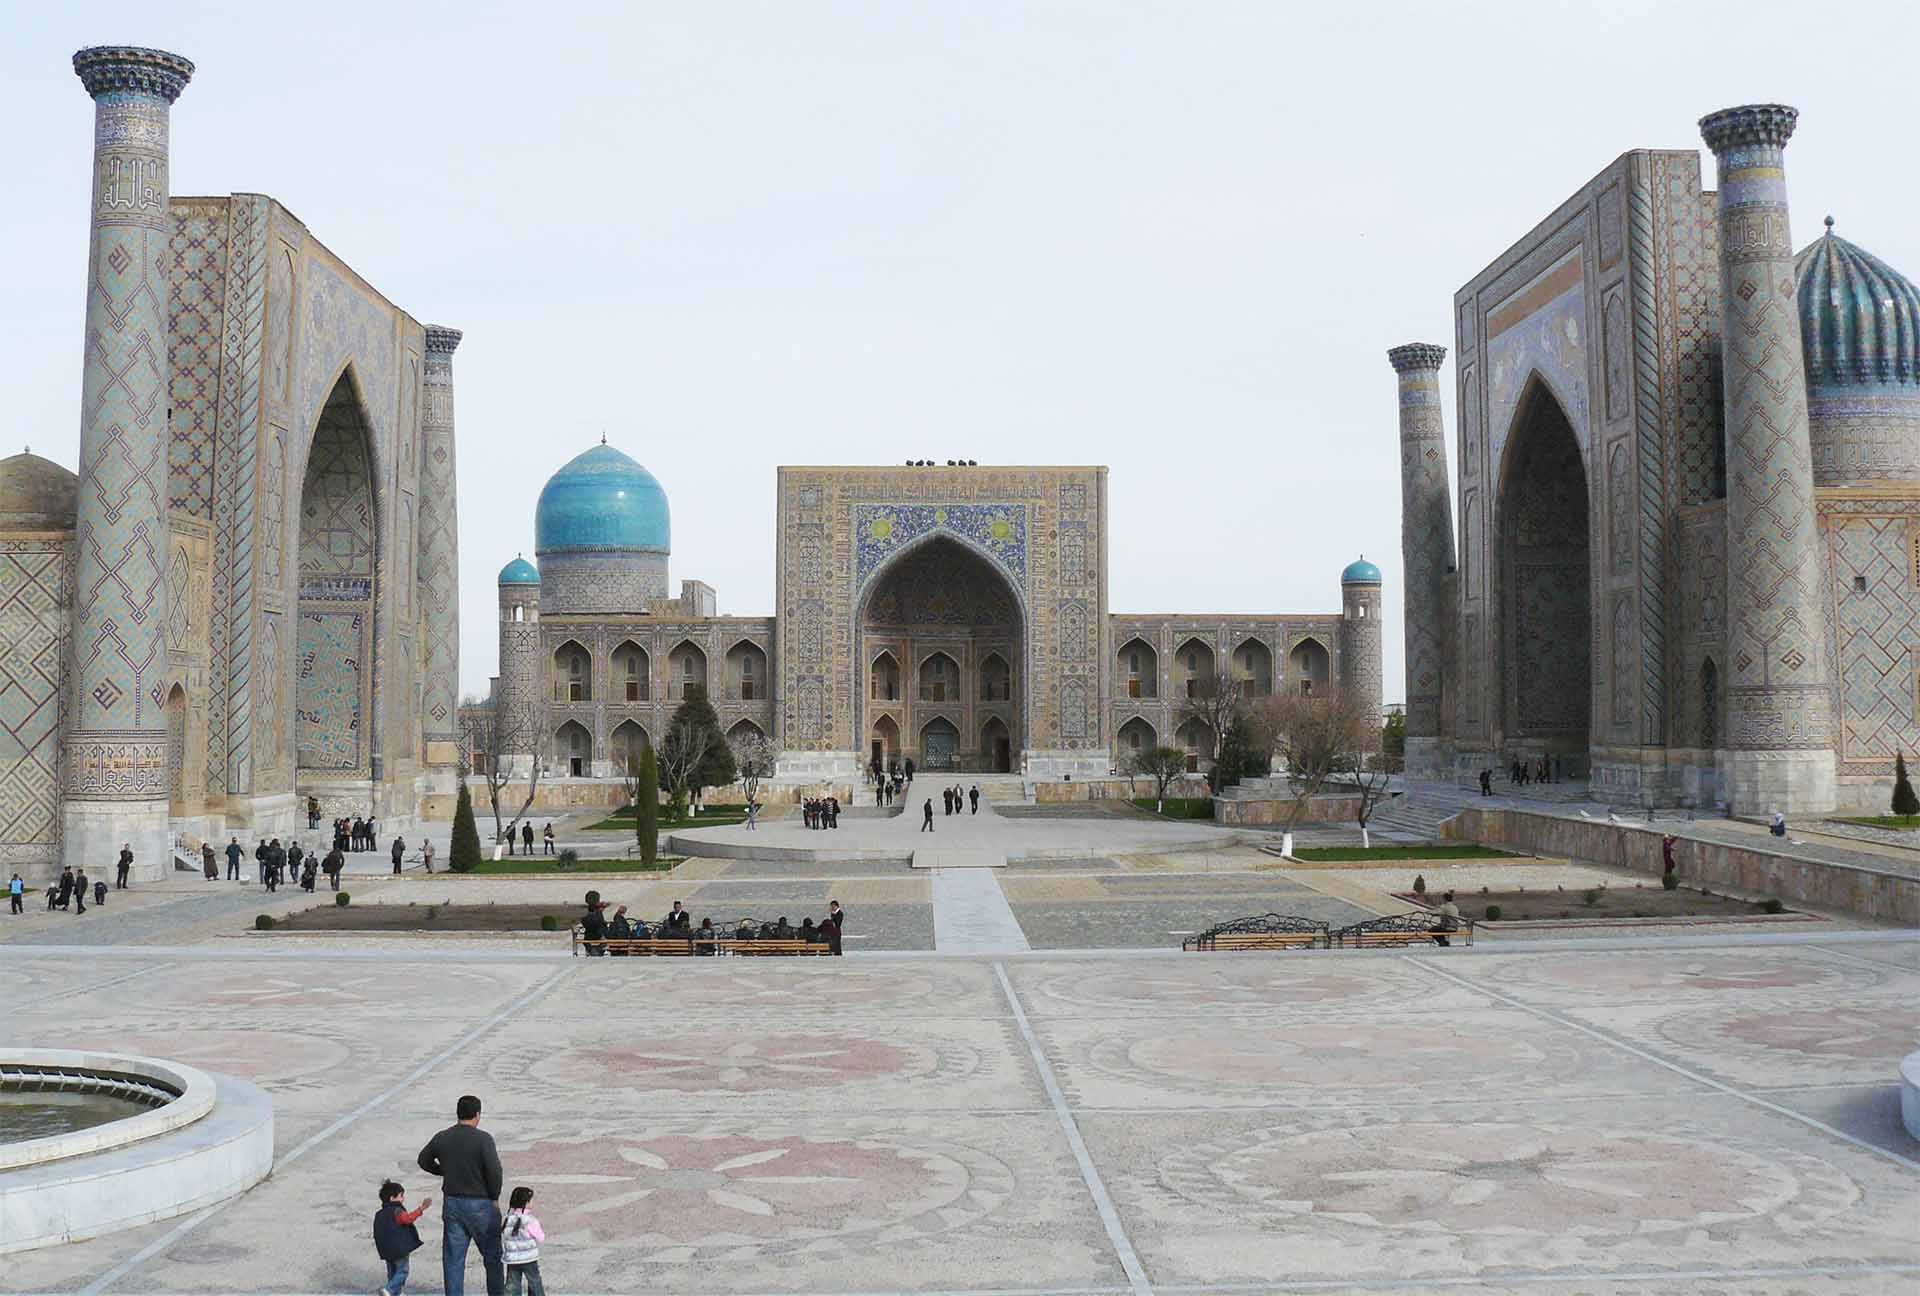 Historic Registan square with three madrasahs: Ulugh Beg, Tilya-Kori and Sher-Dor, Samarkend, Uzbekistan